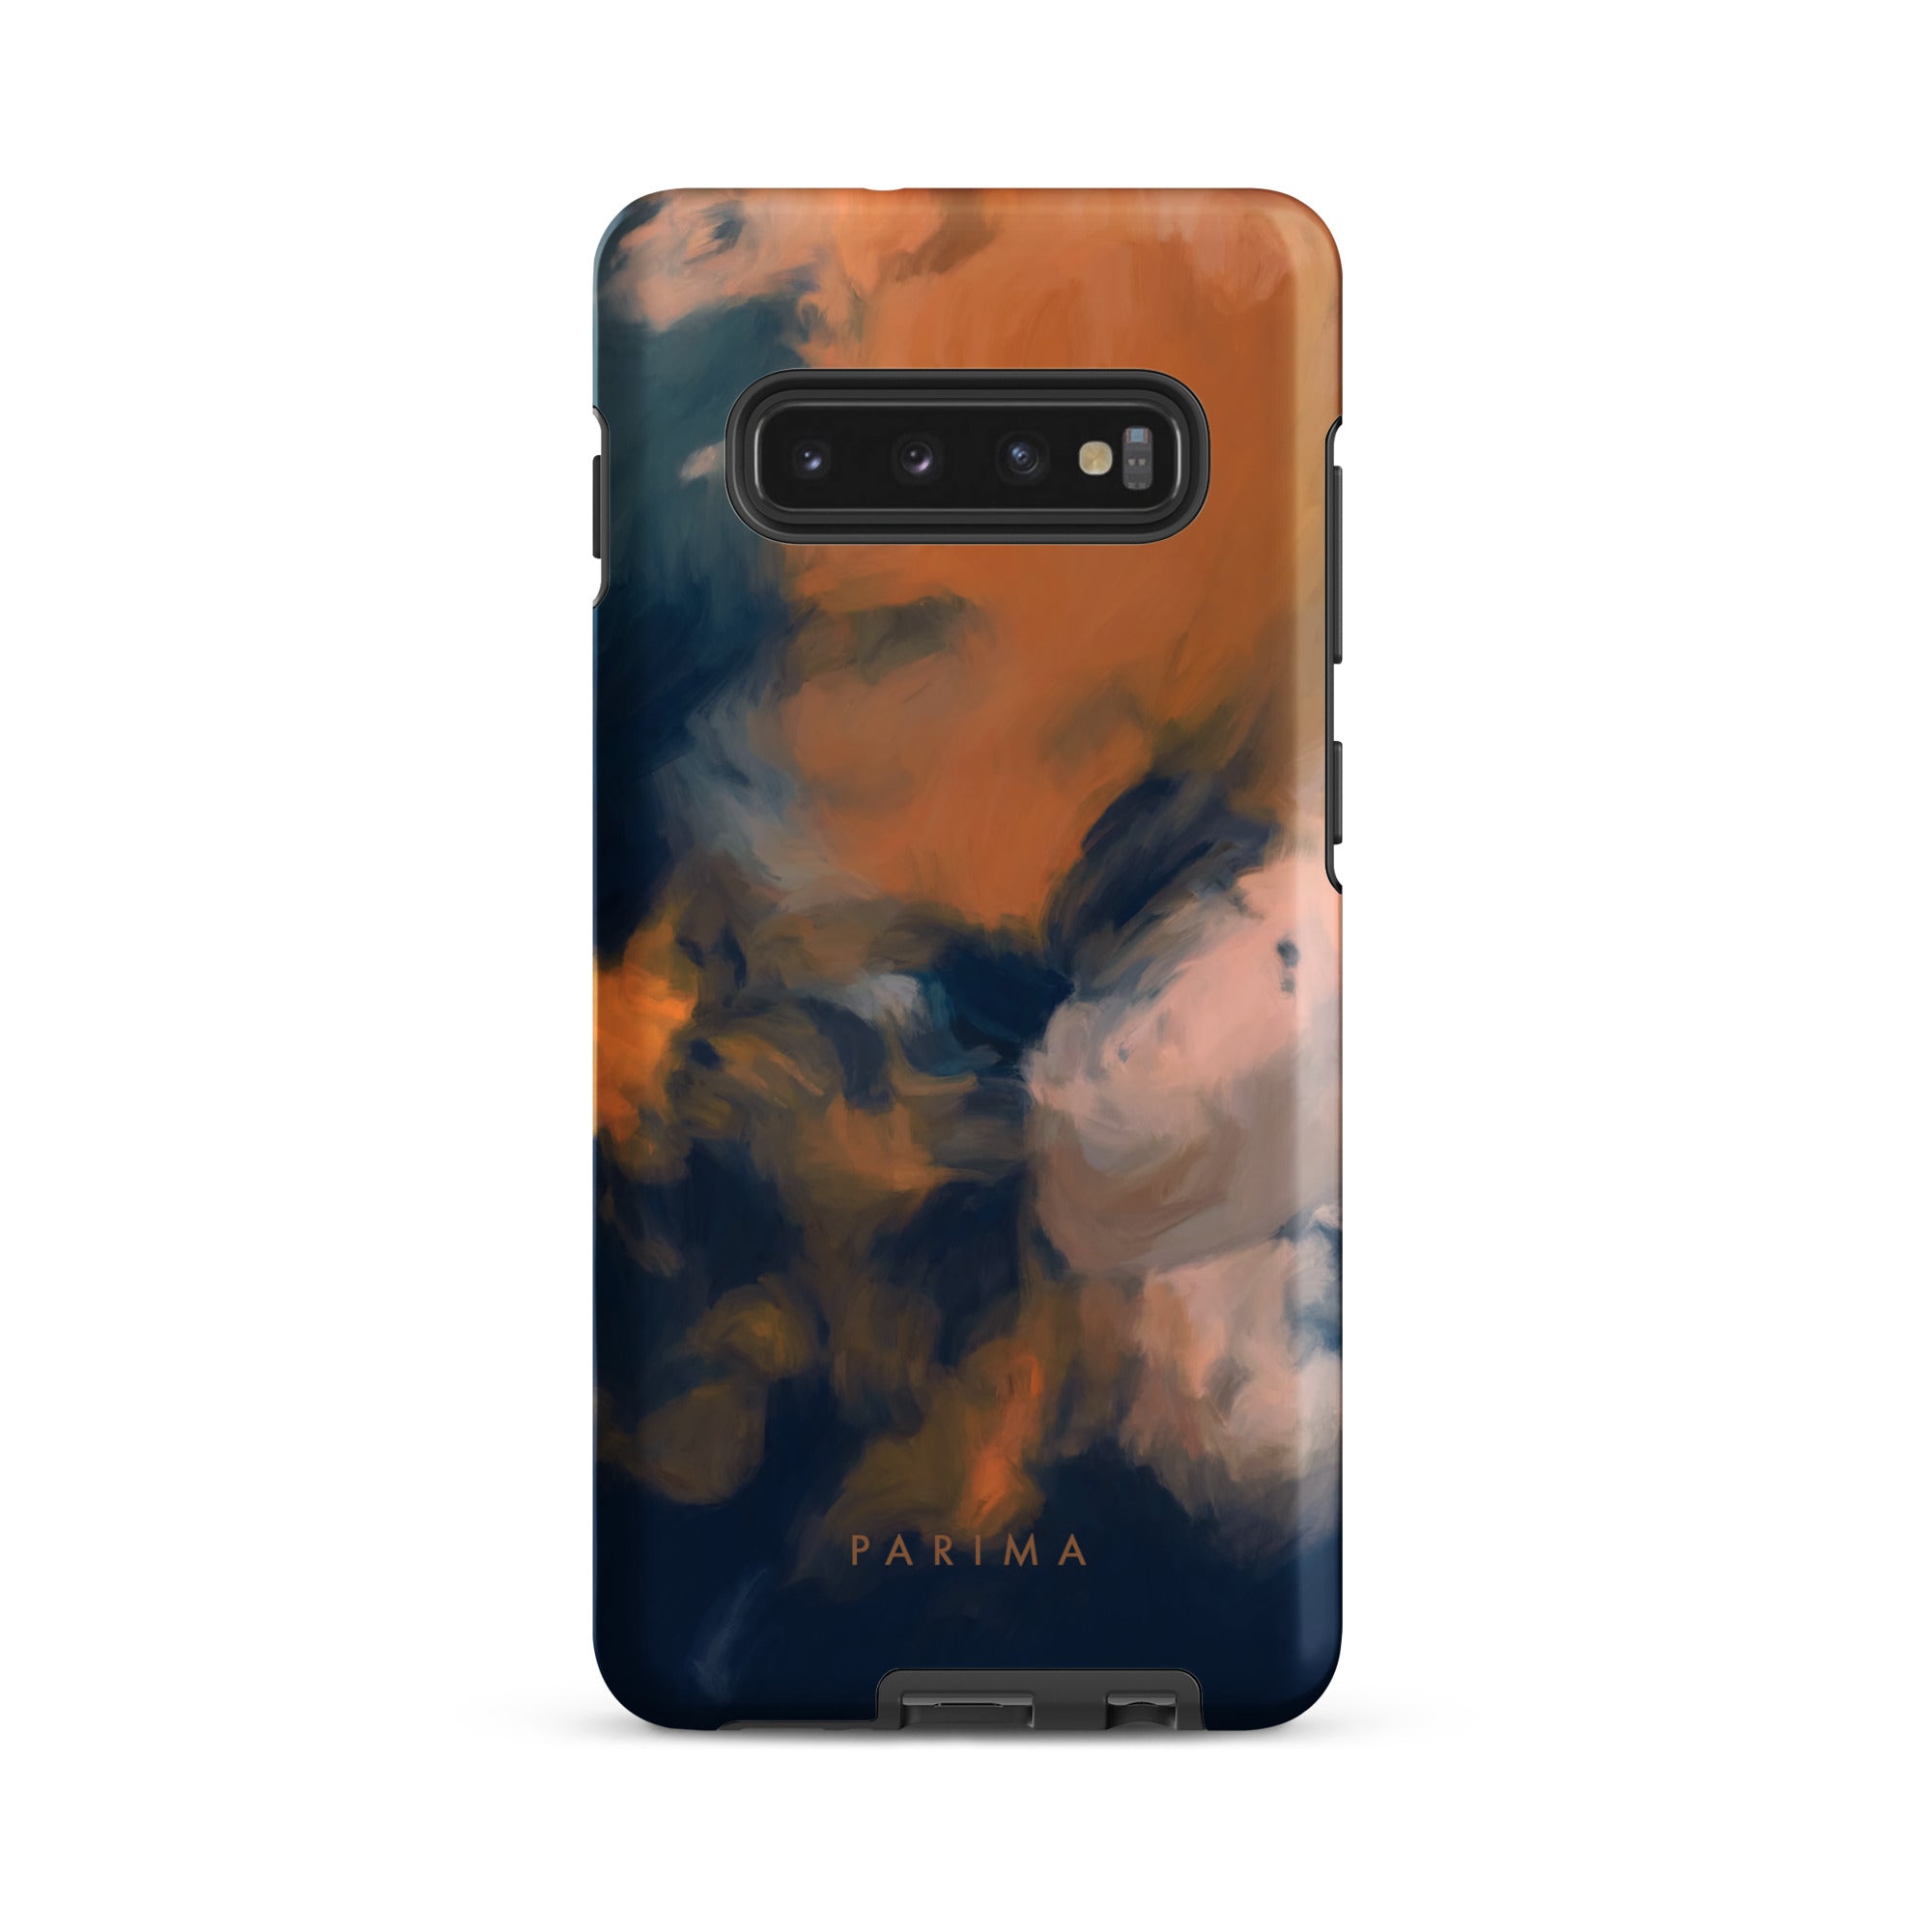 Mia Luna, blue and orange abstract art on Samsung Galaxy S10 plus tough case by Parima Studio